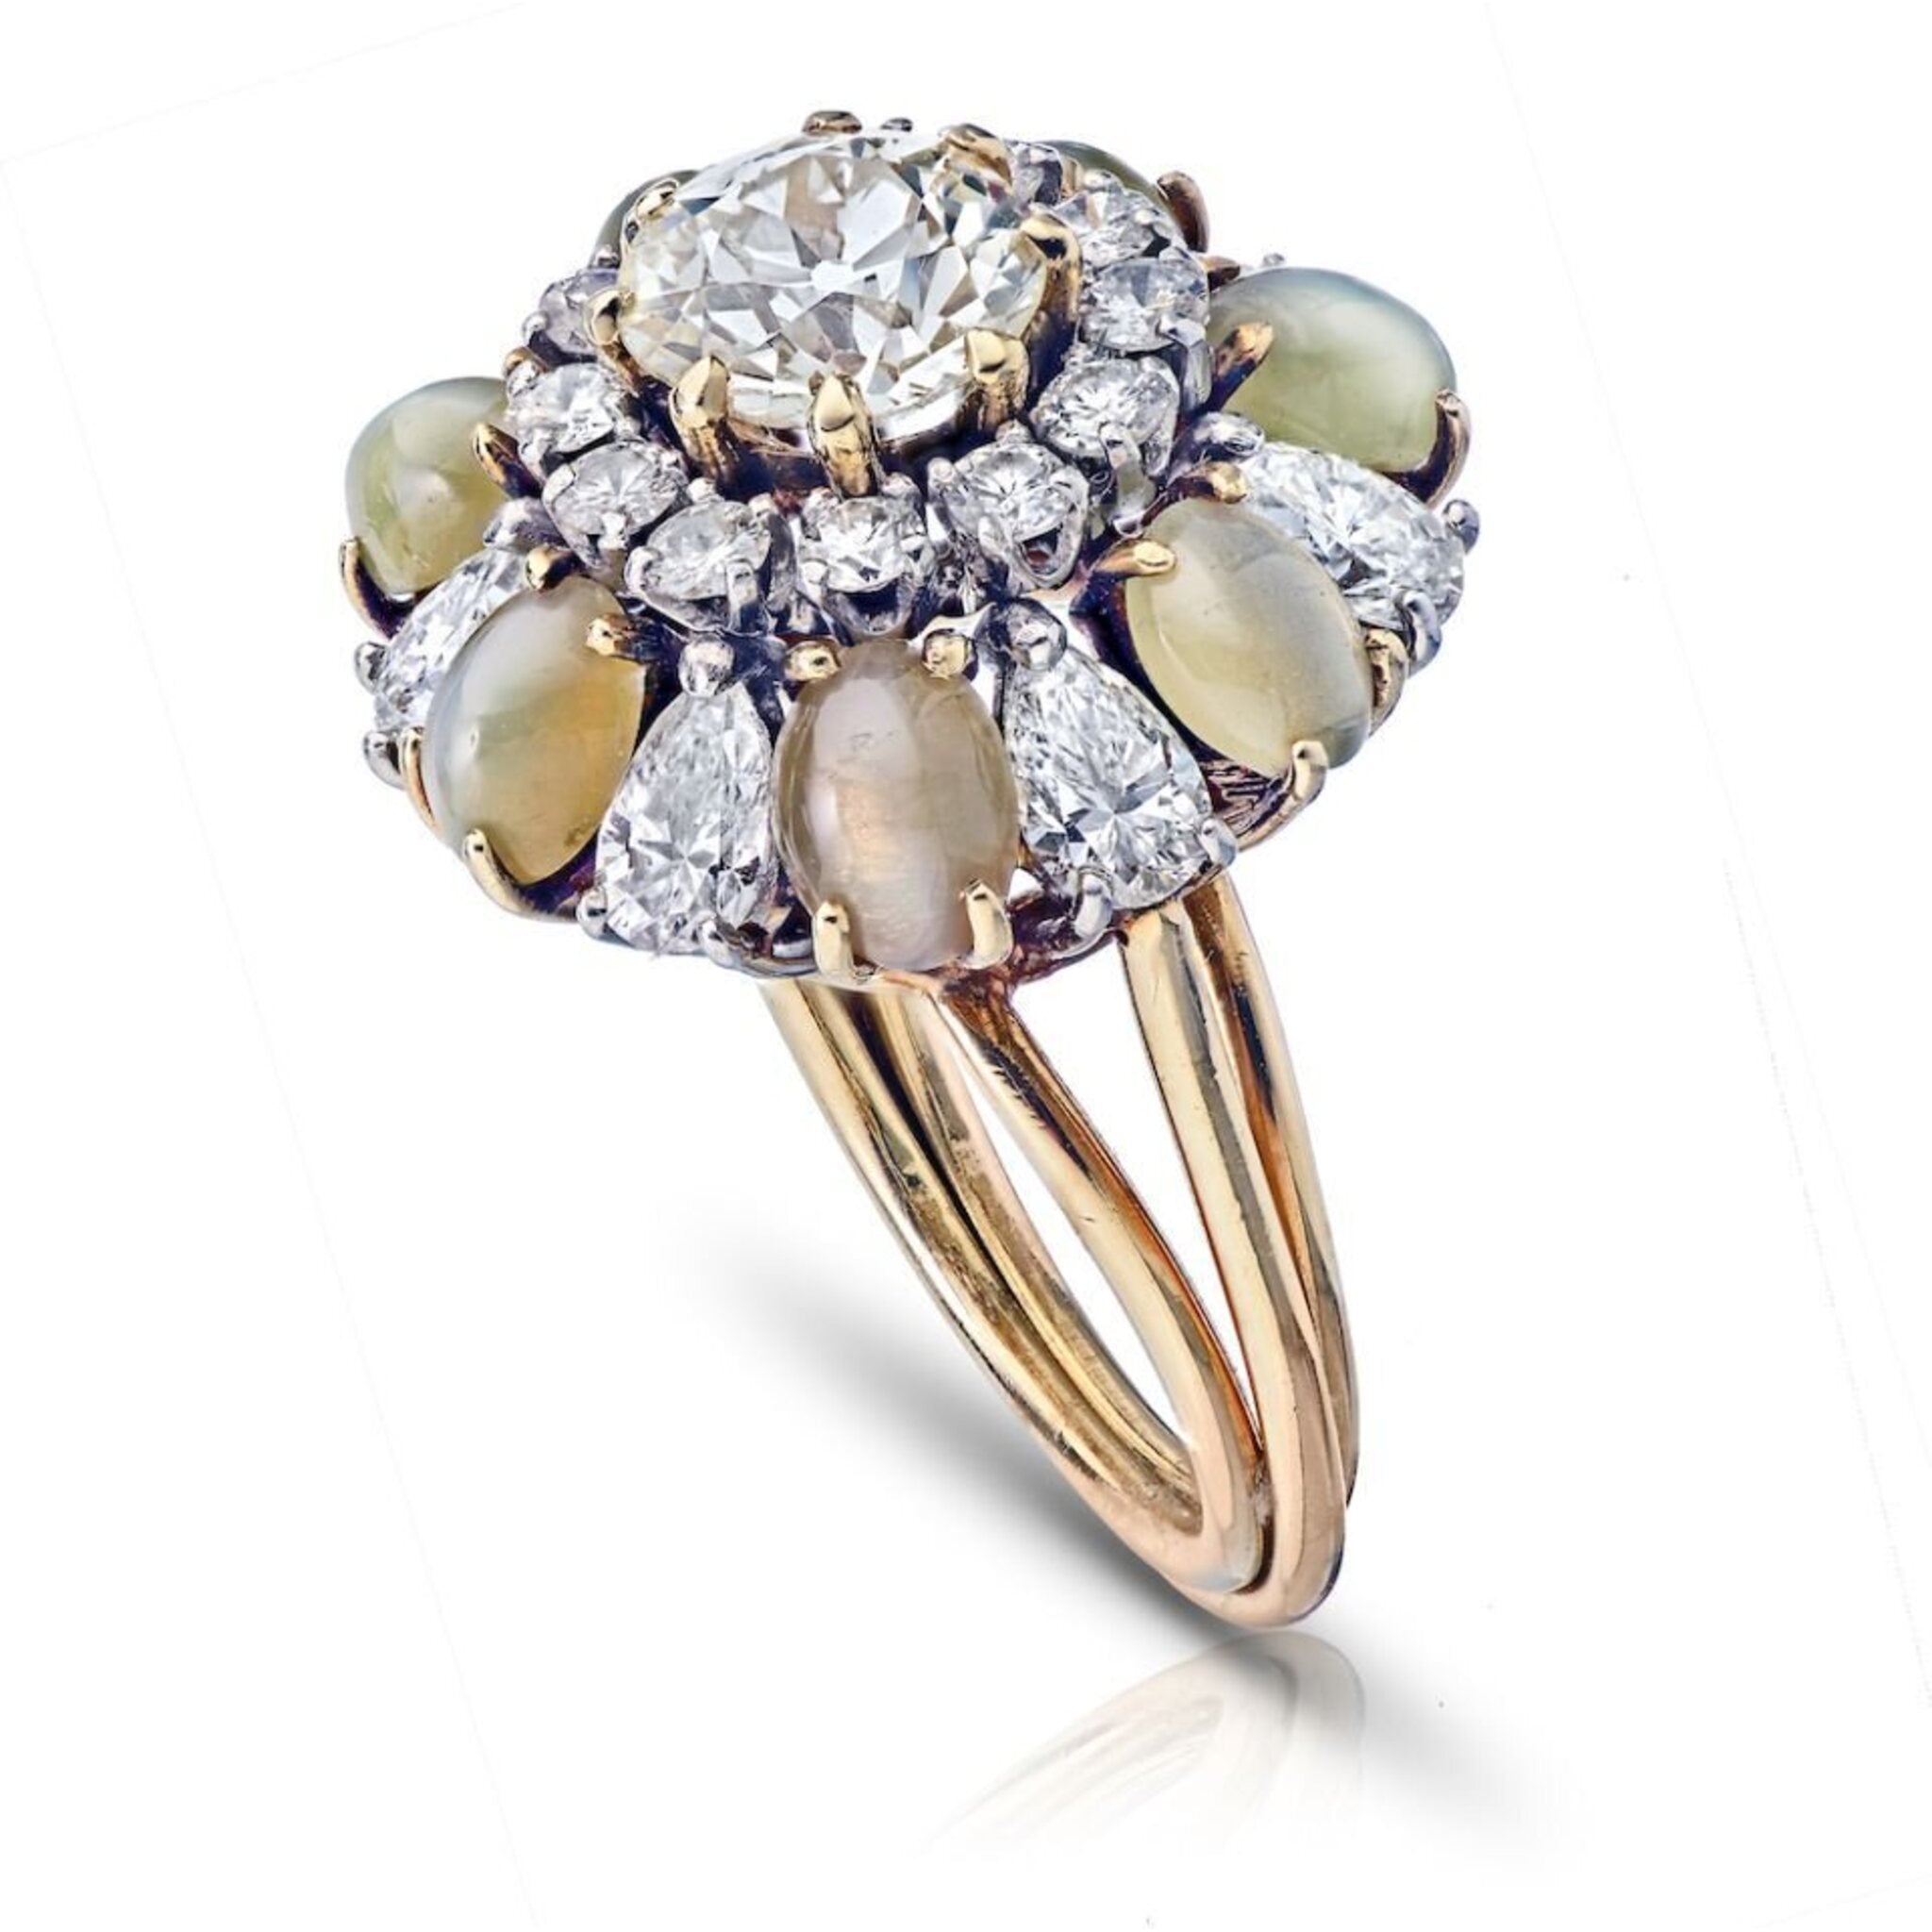 18K Yellow Gold Center European Cut Diamond And Opal Engagement Ring